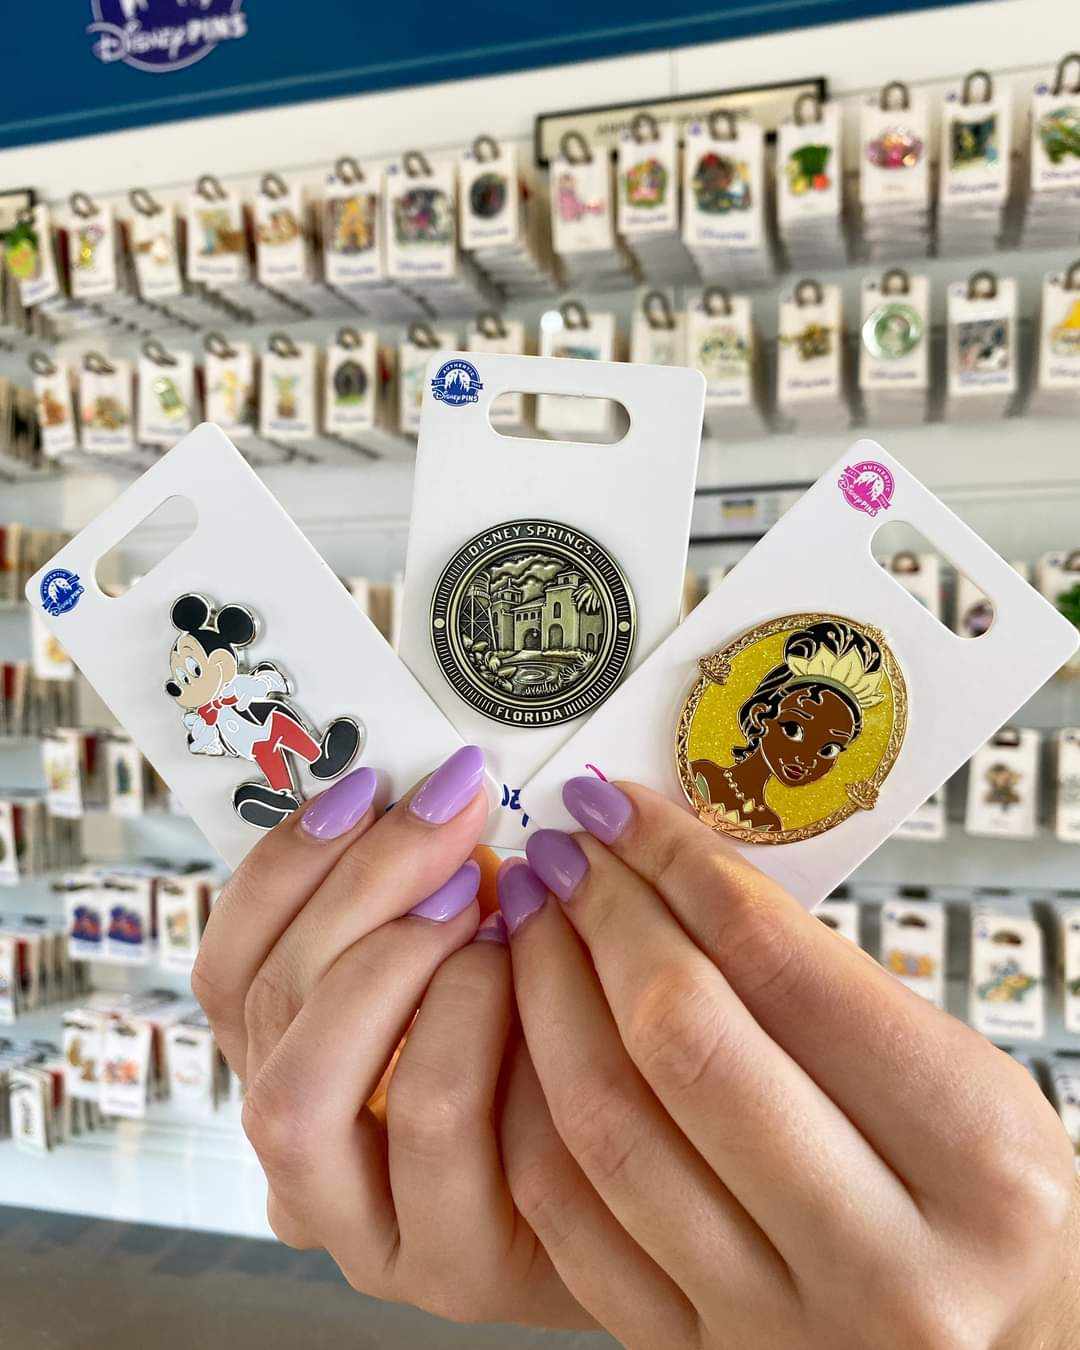 Pin Trading Kiosk Opens in Disney Springs